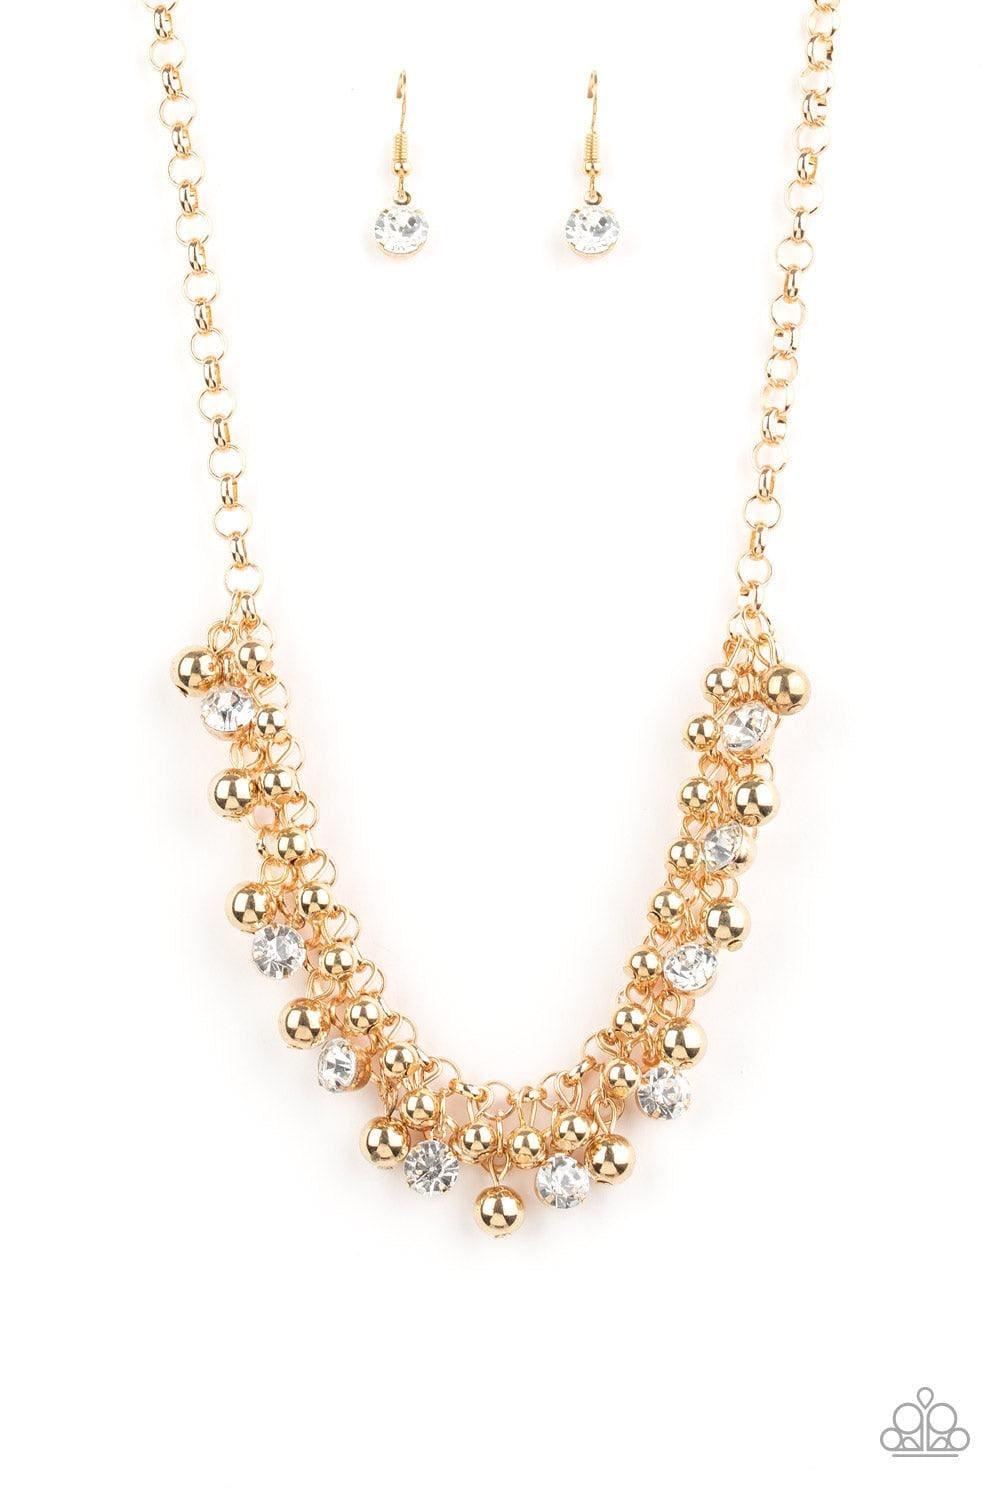 Paparazzi Accessories - Wall Street Winner - Gold Necklace - Bling by JessieK